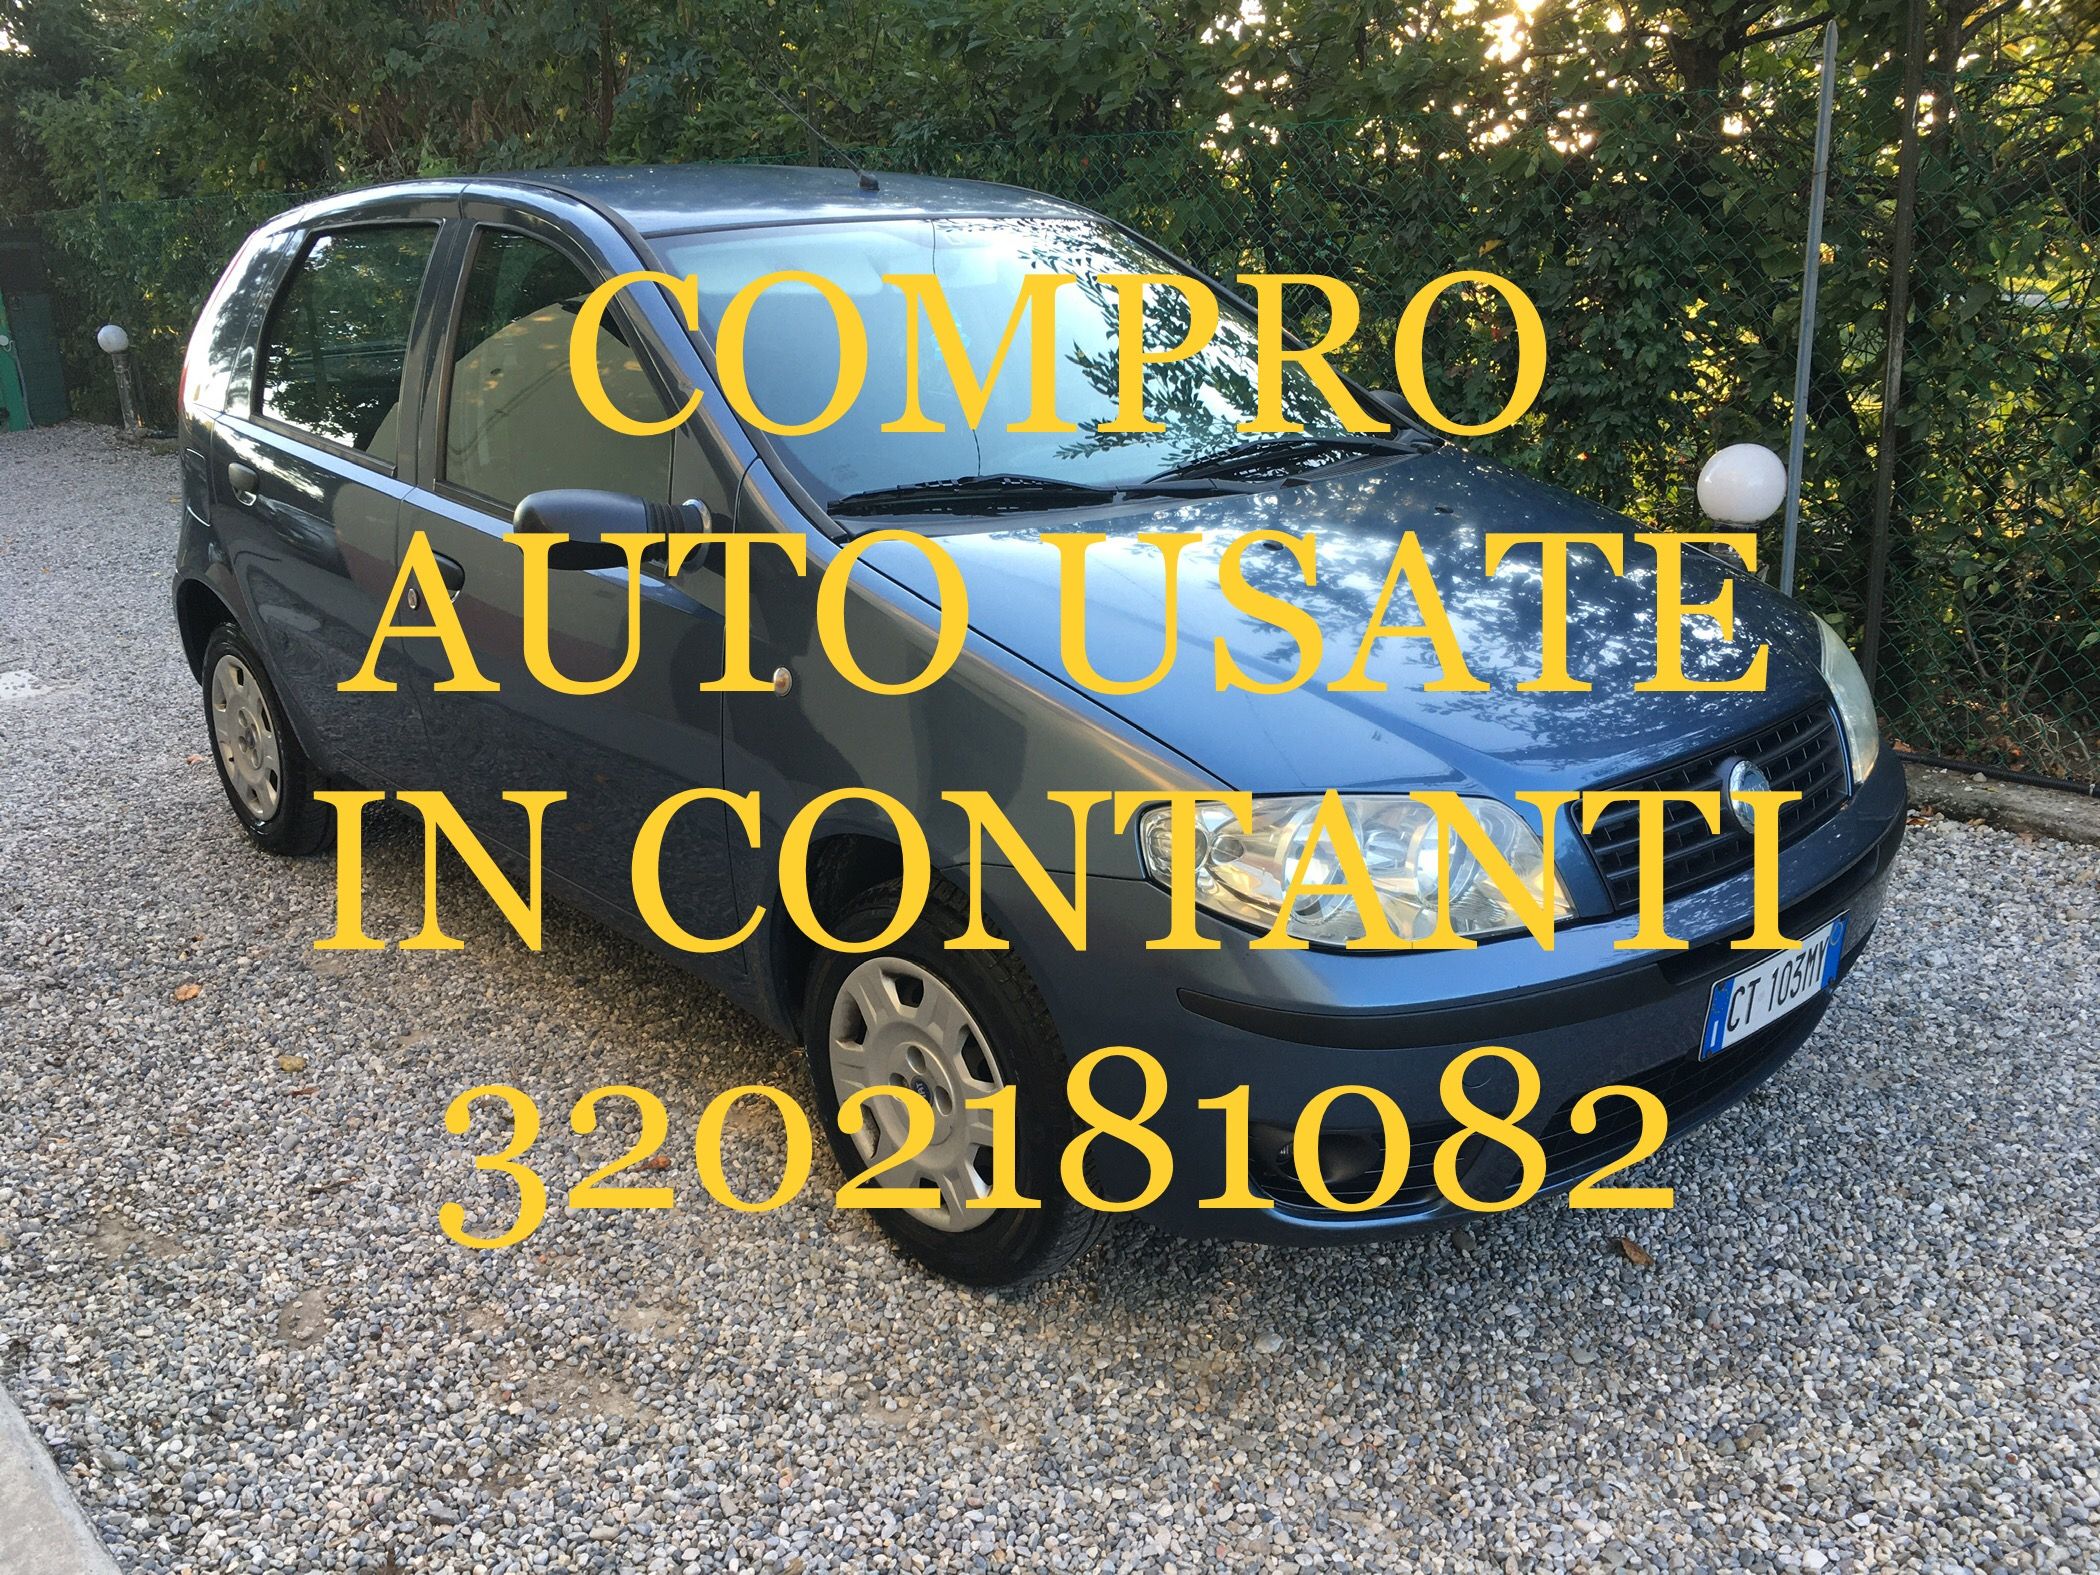 Compro auto usate 3202181082 Bologna Ferrara Moden